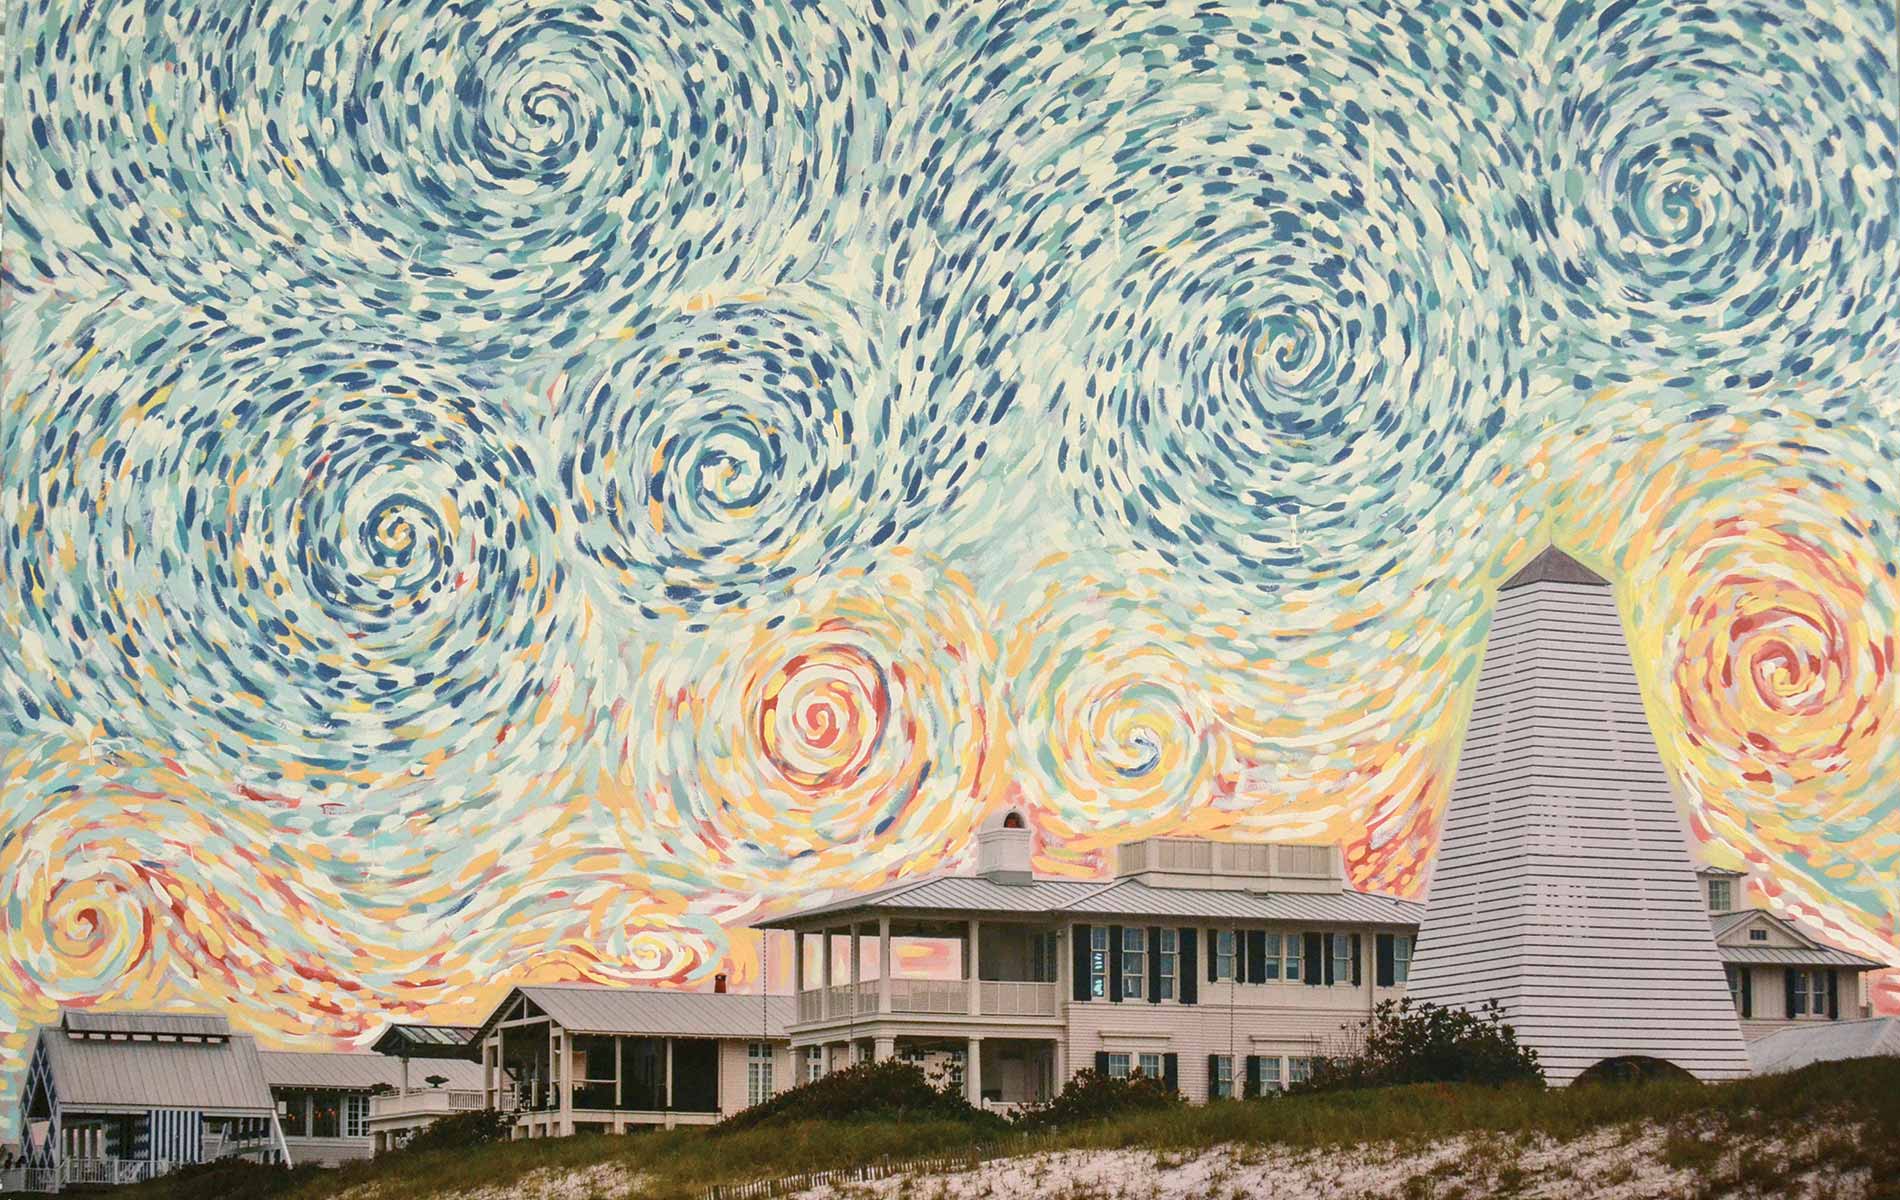 Andy Saczynski and Ryan Manthey collaborative painting Seaside Swirls artists photography paint